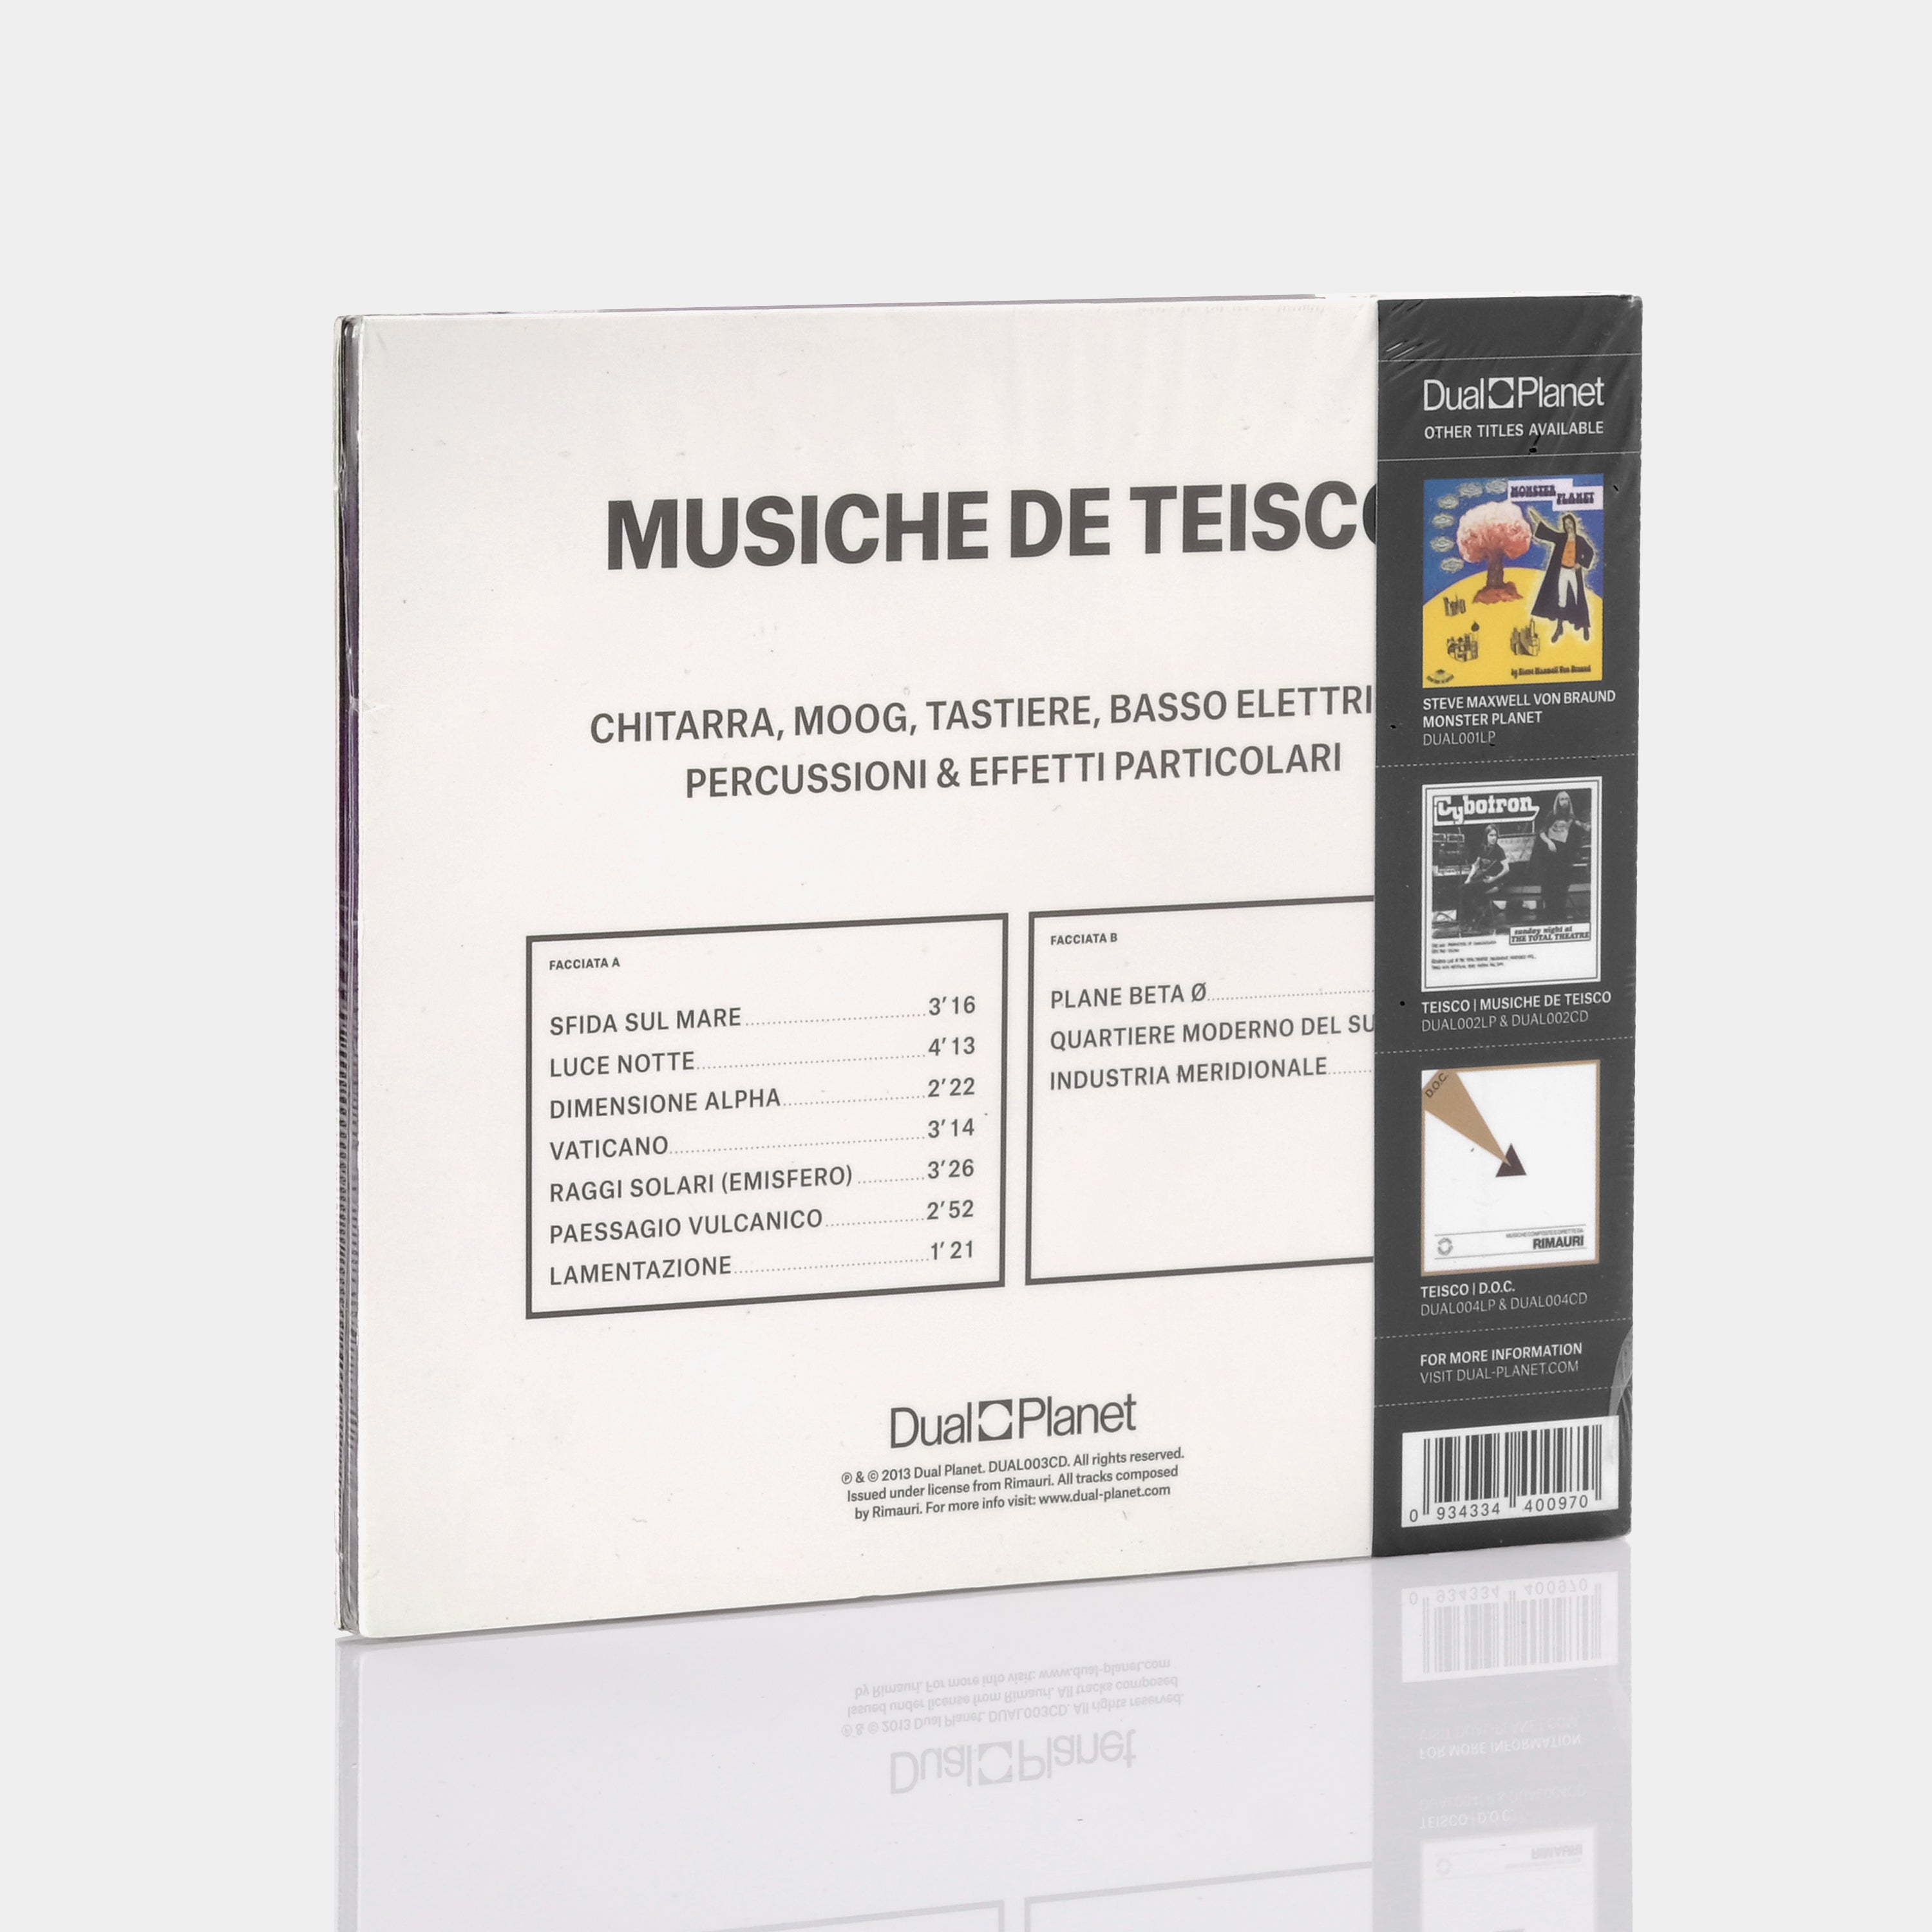 Teisco - Musiche De Teisco CD